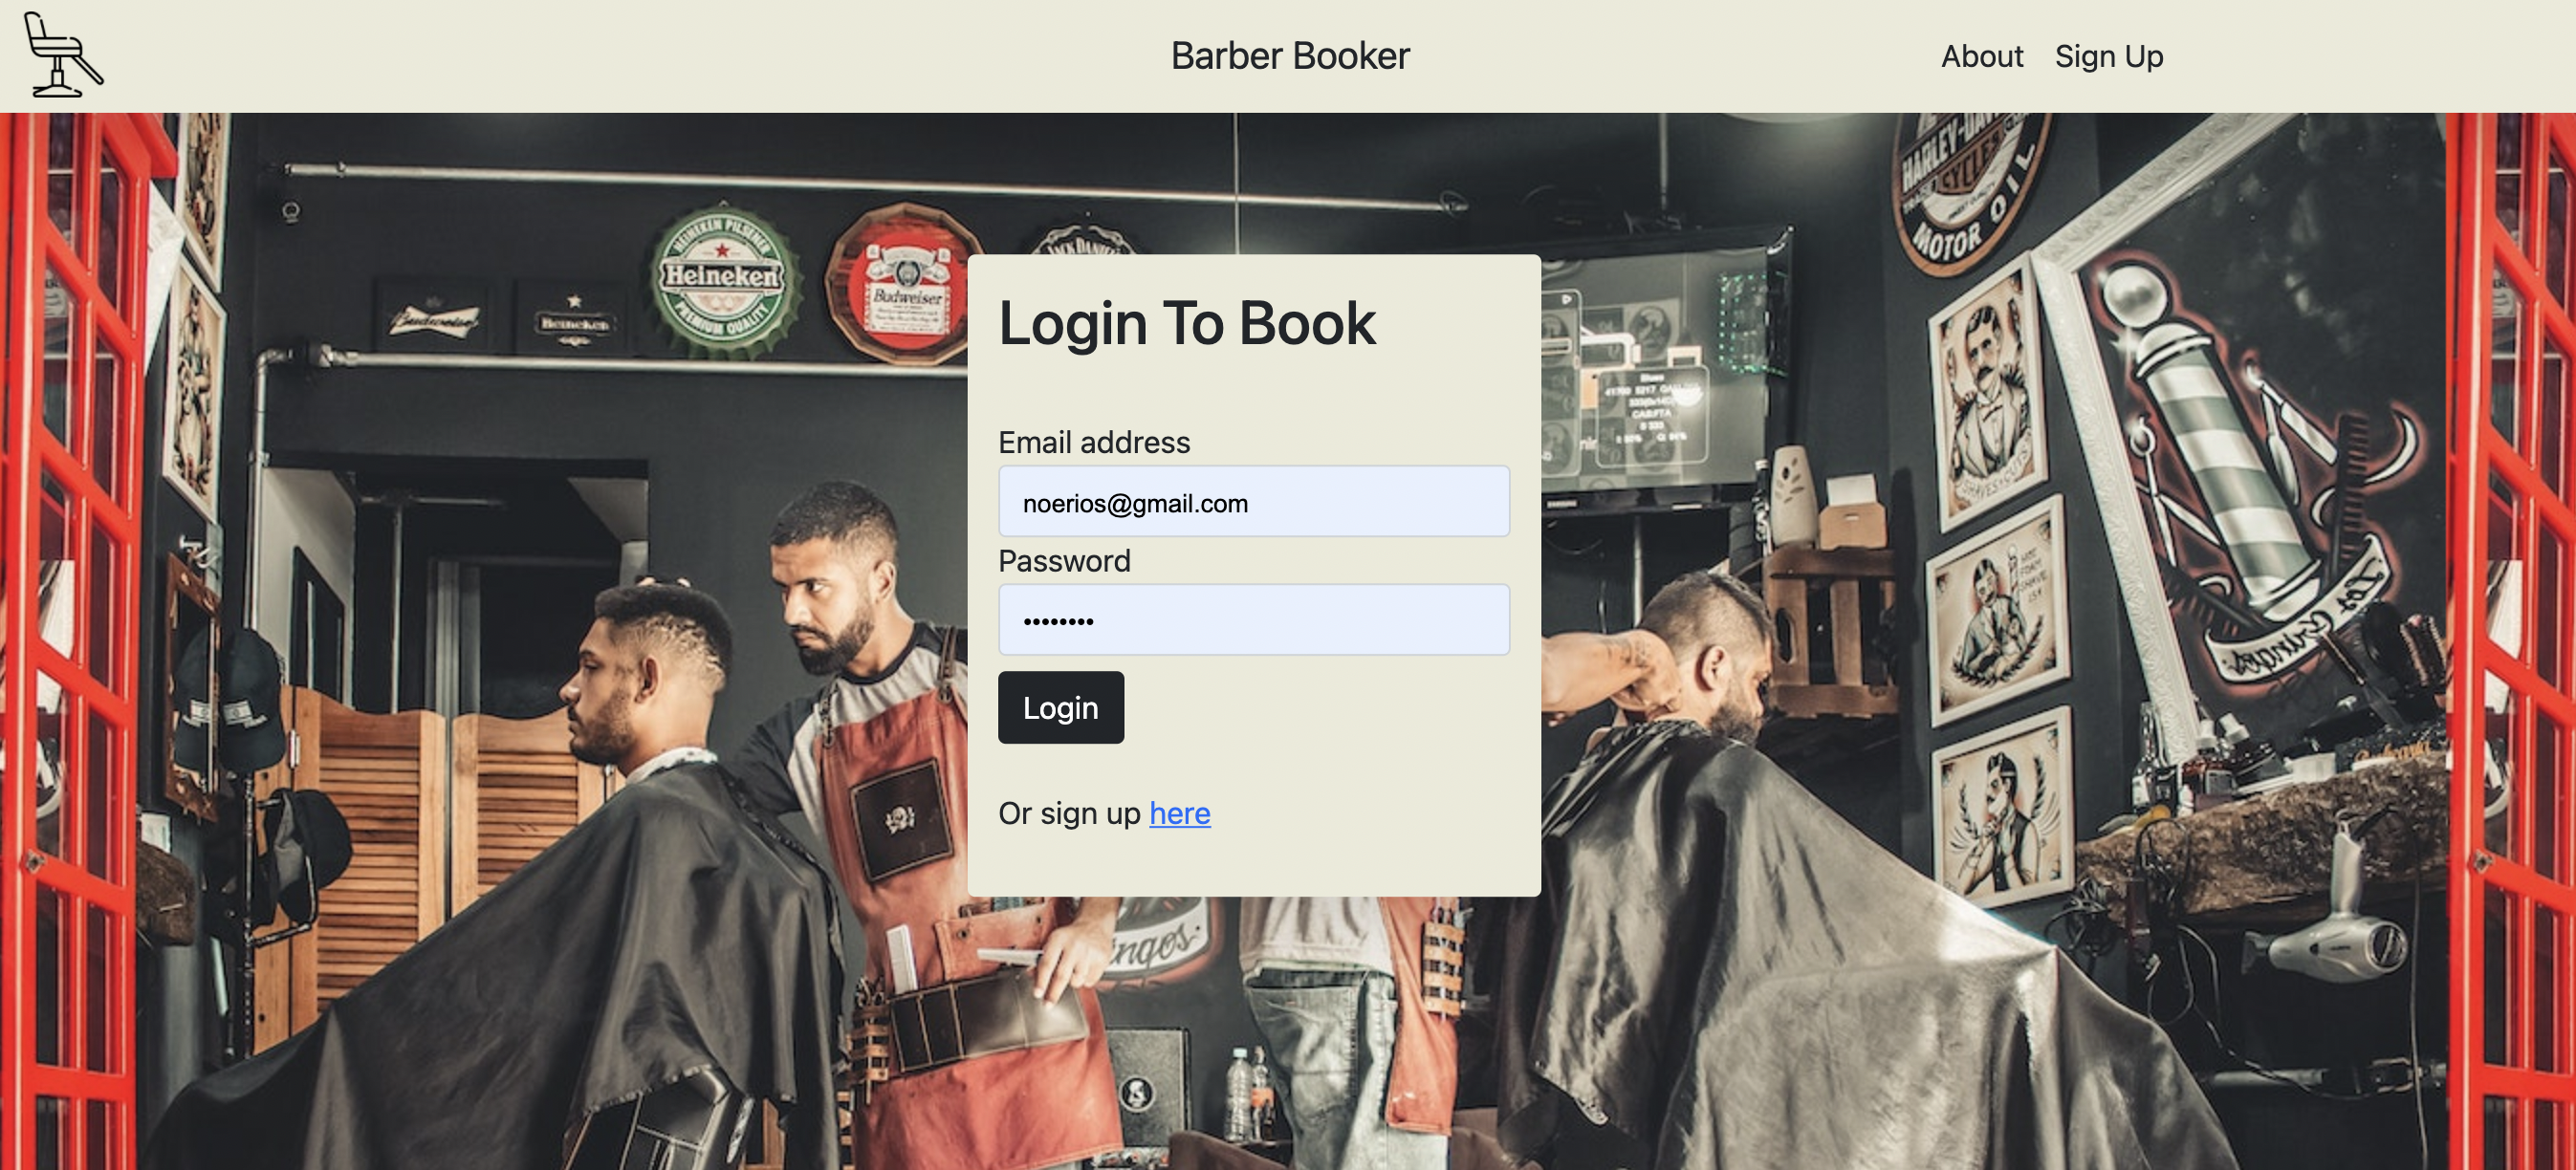 Barbershop Booker Screenshot